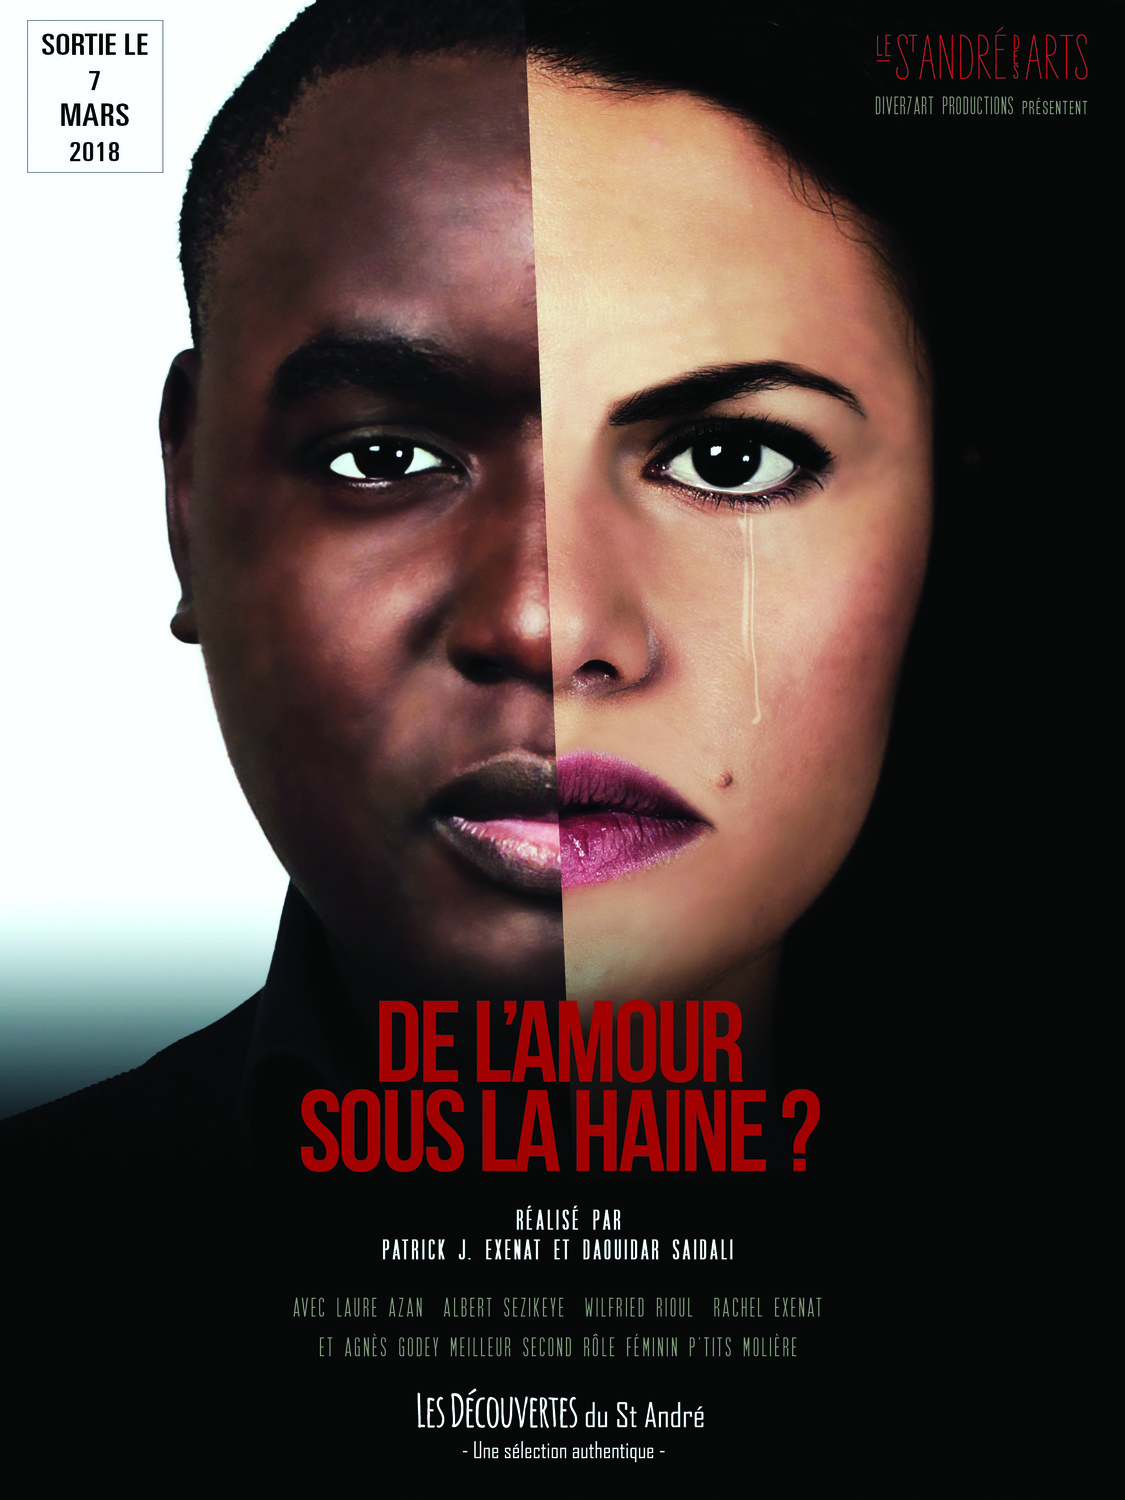 Extra Large Movie Poster Image for De l'amour sous la haine? (#2 of 2)